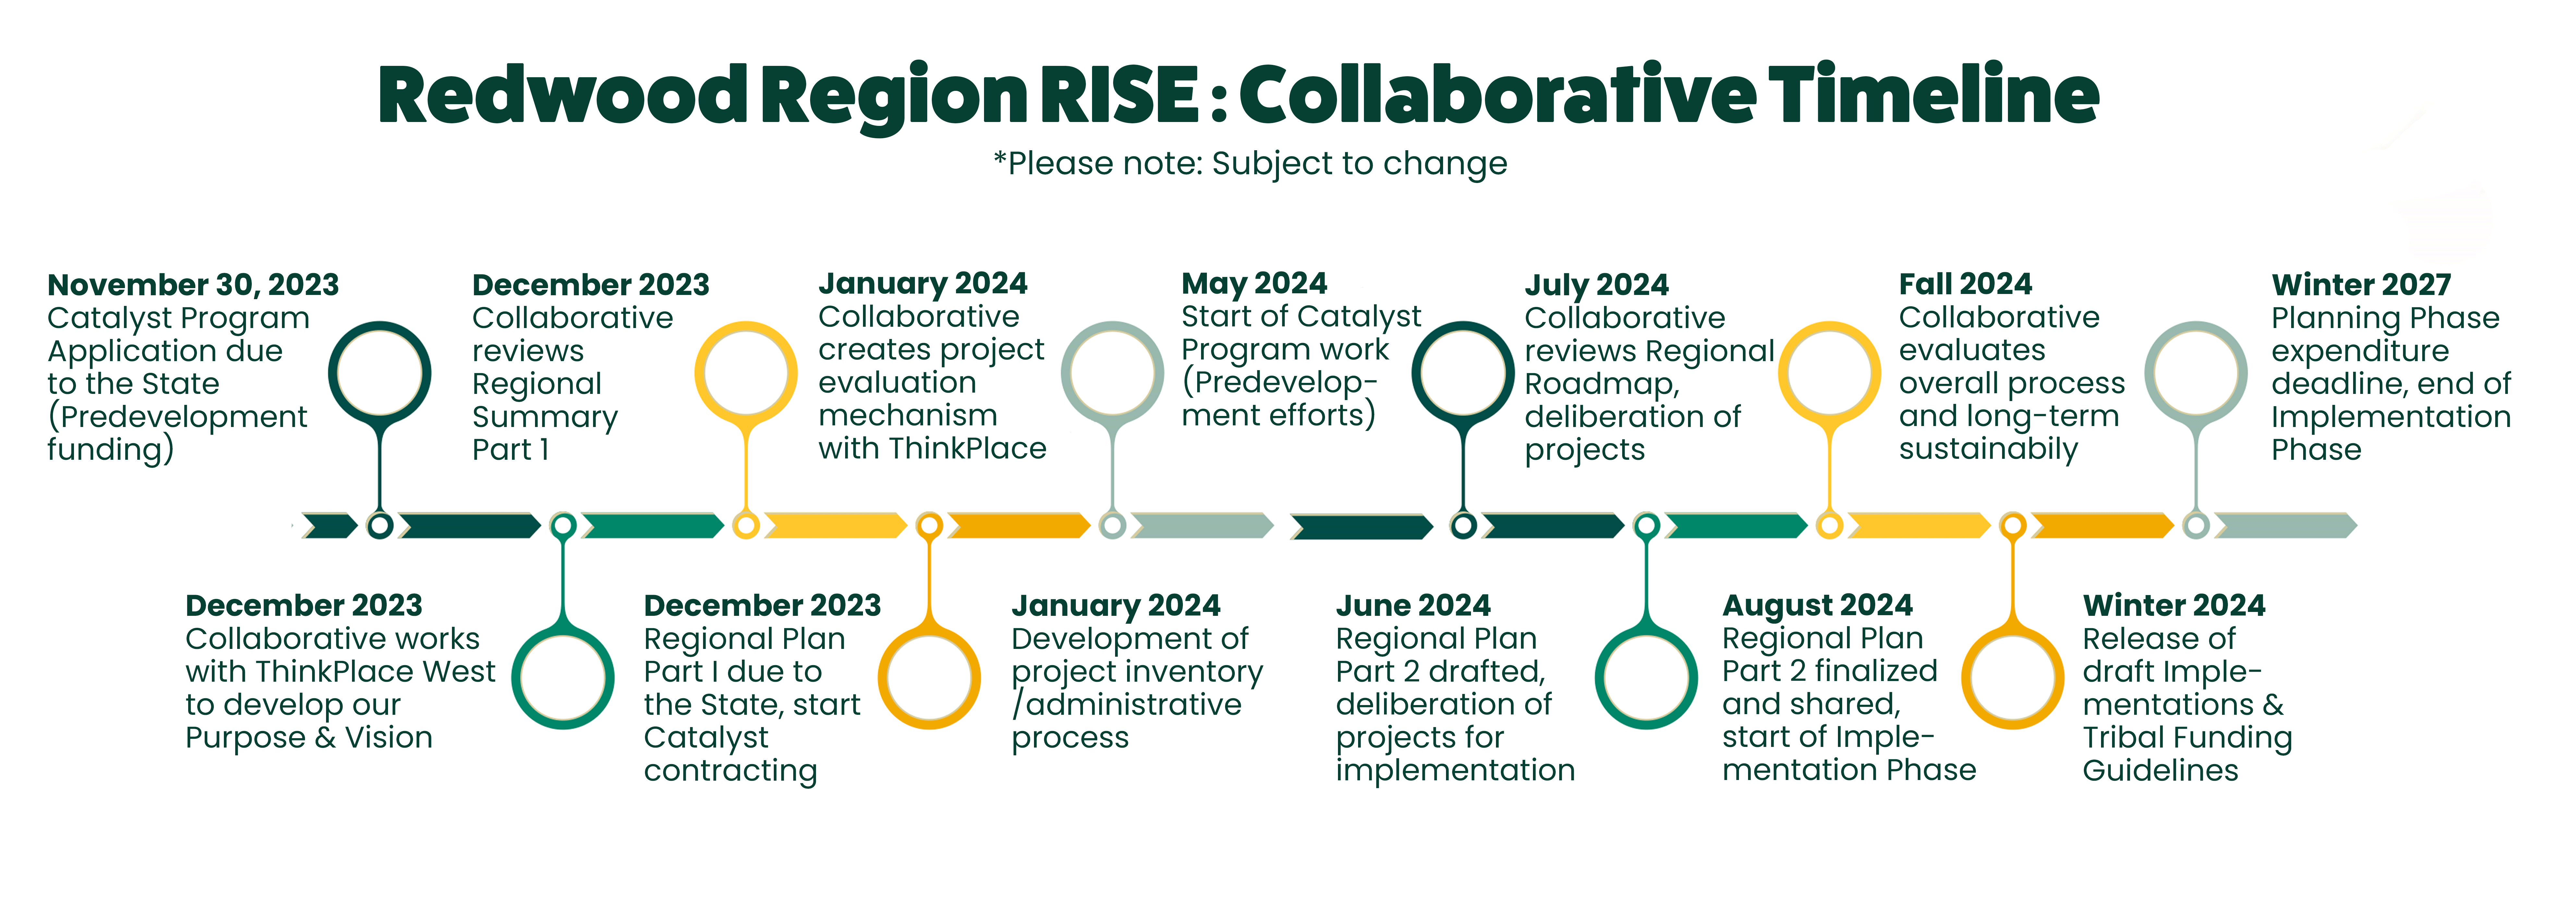 Redwood Region RISE - Timeline - Zoomed In